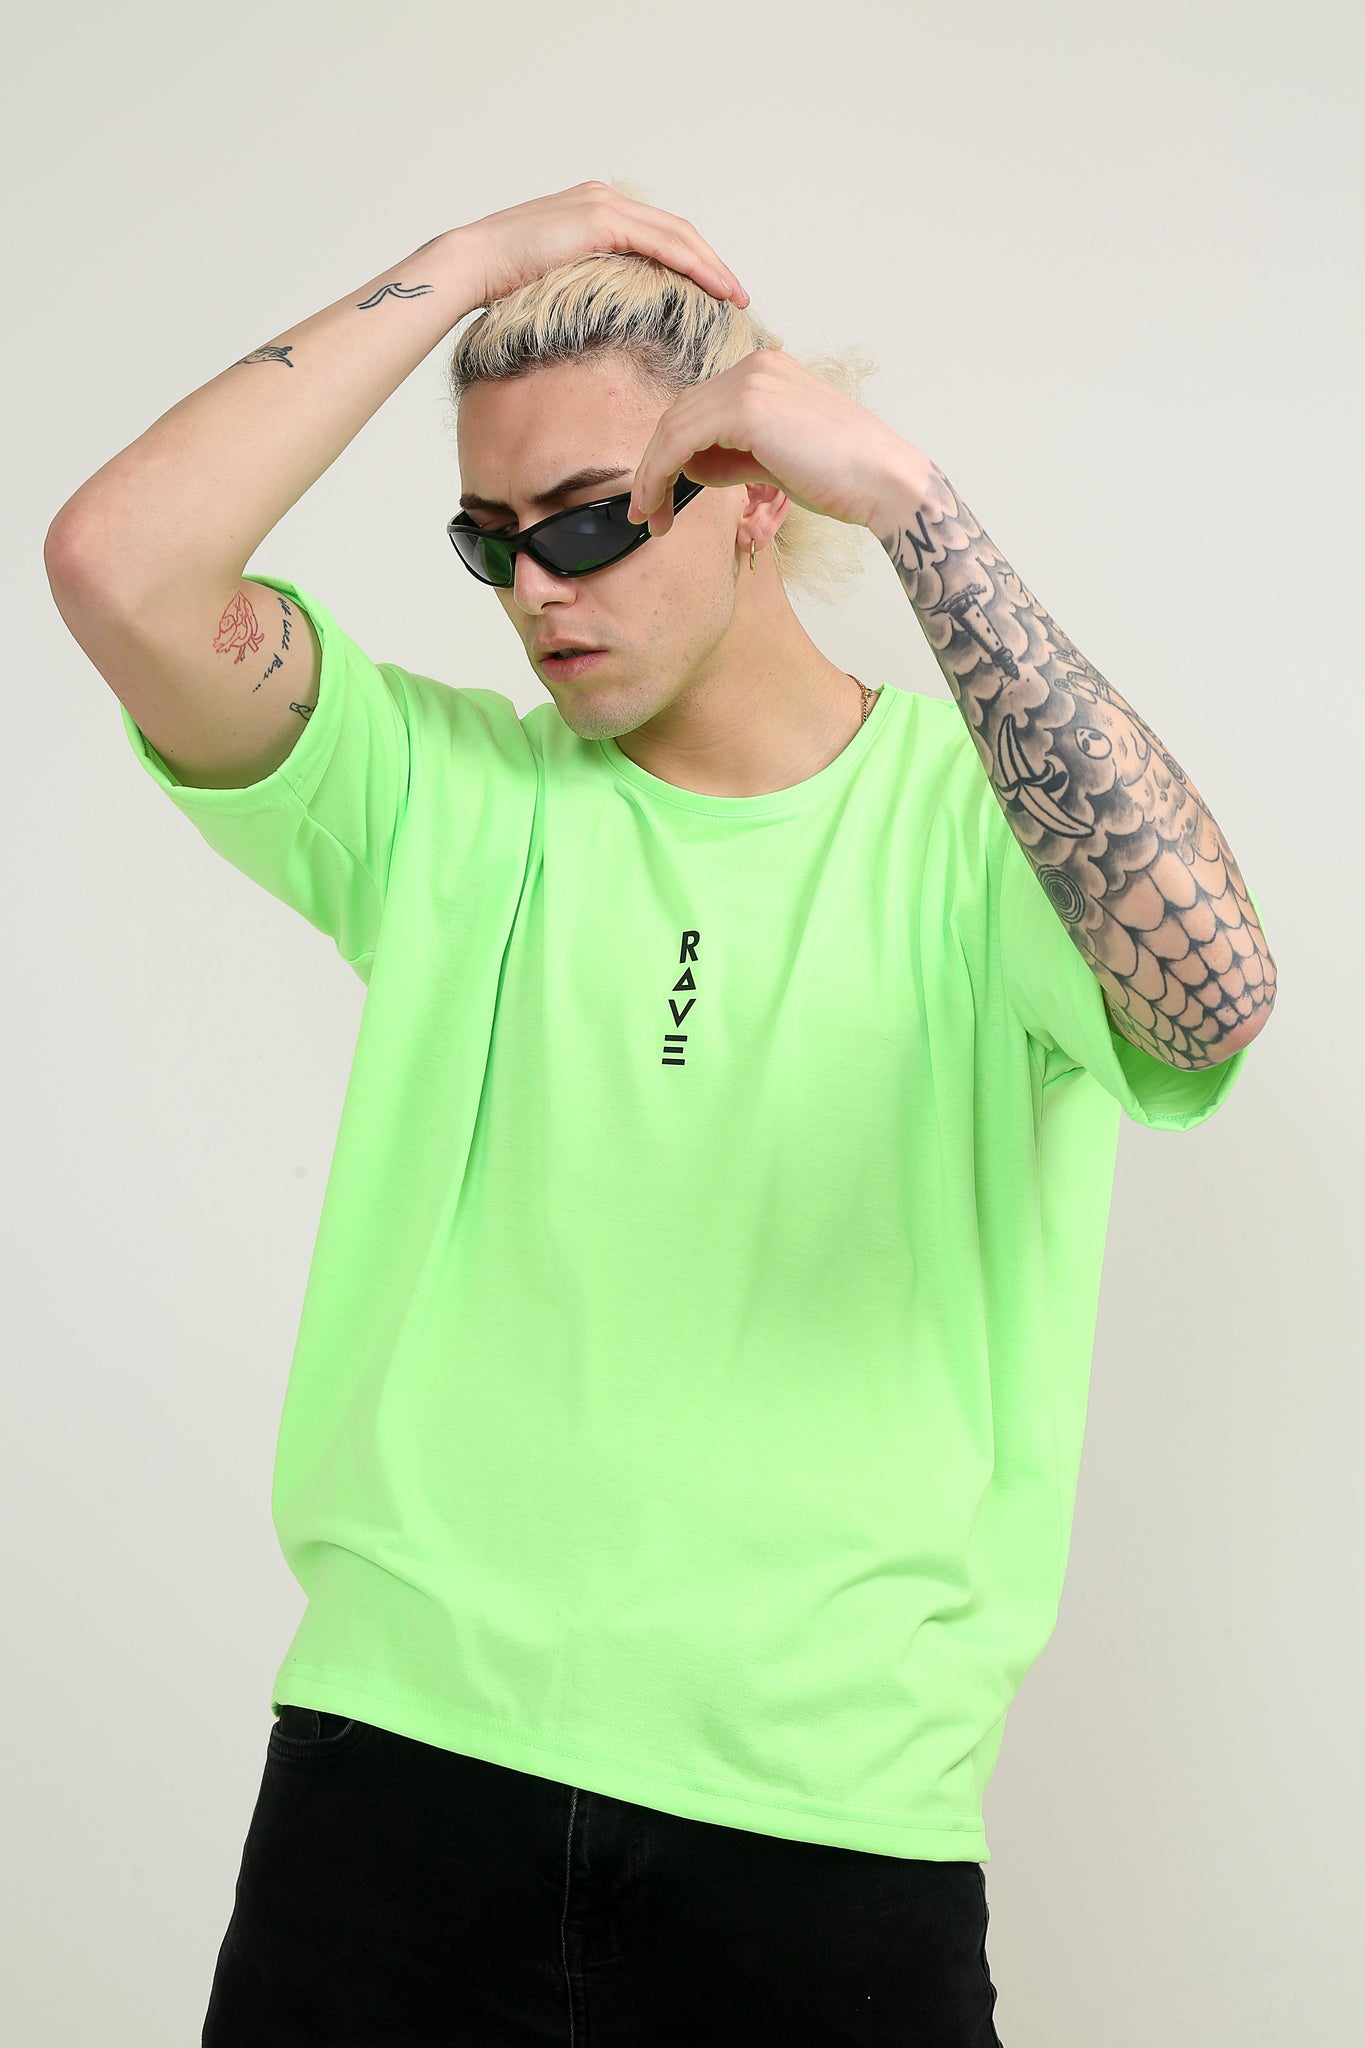 The R.A.V.E Oversize Neon Yeşil T-Shirt